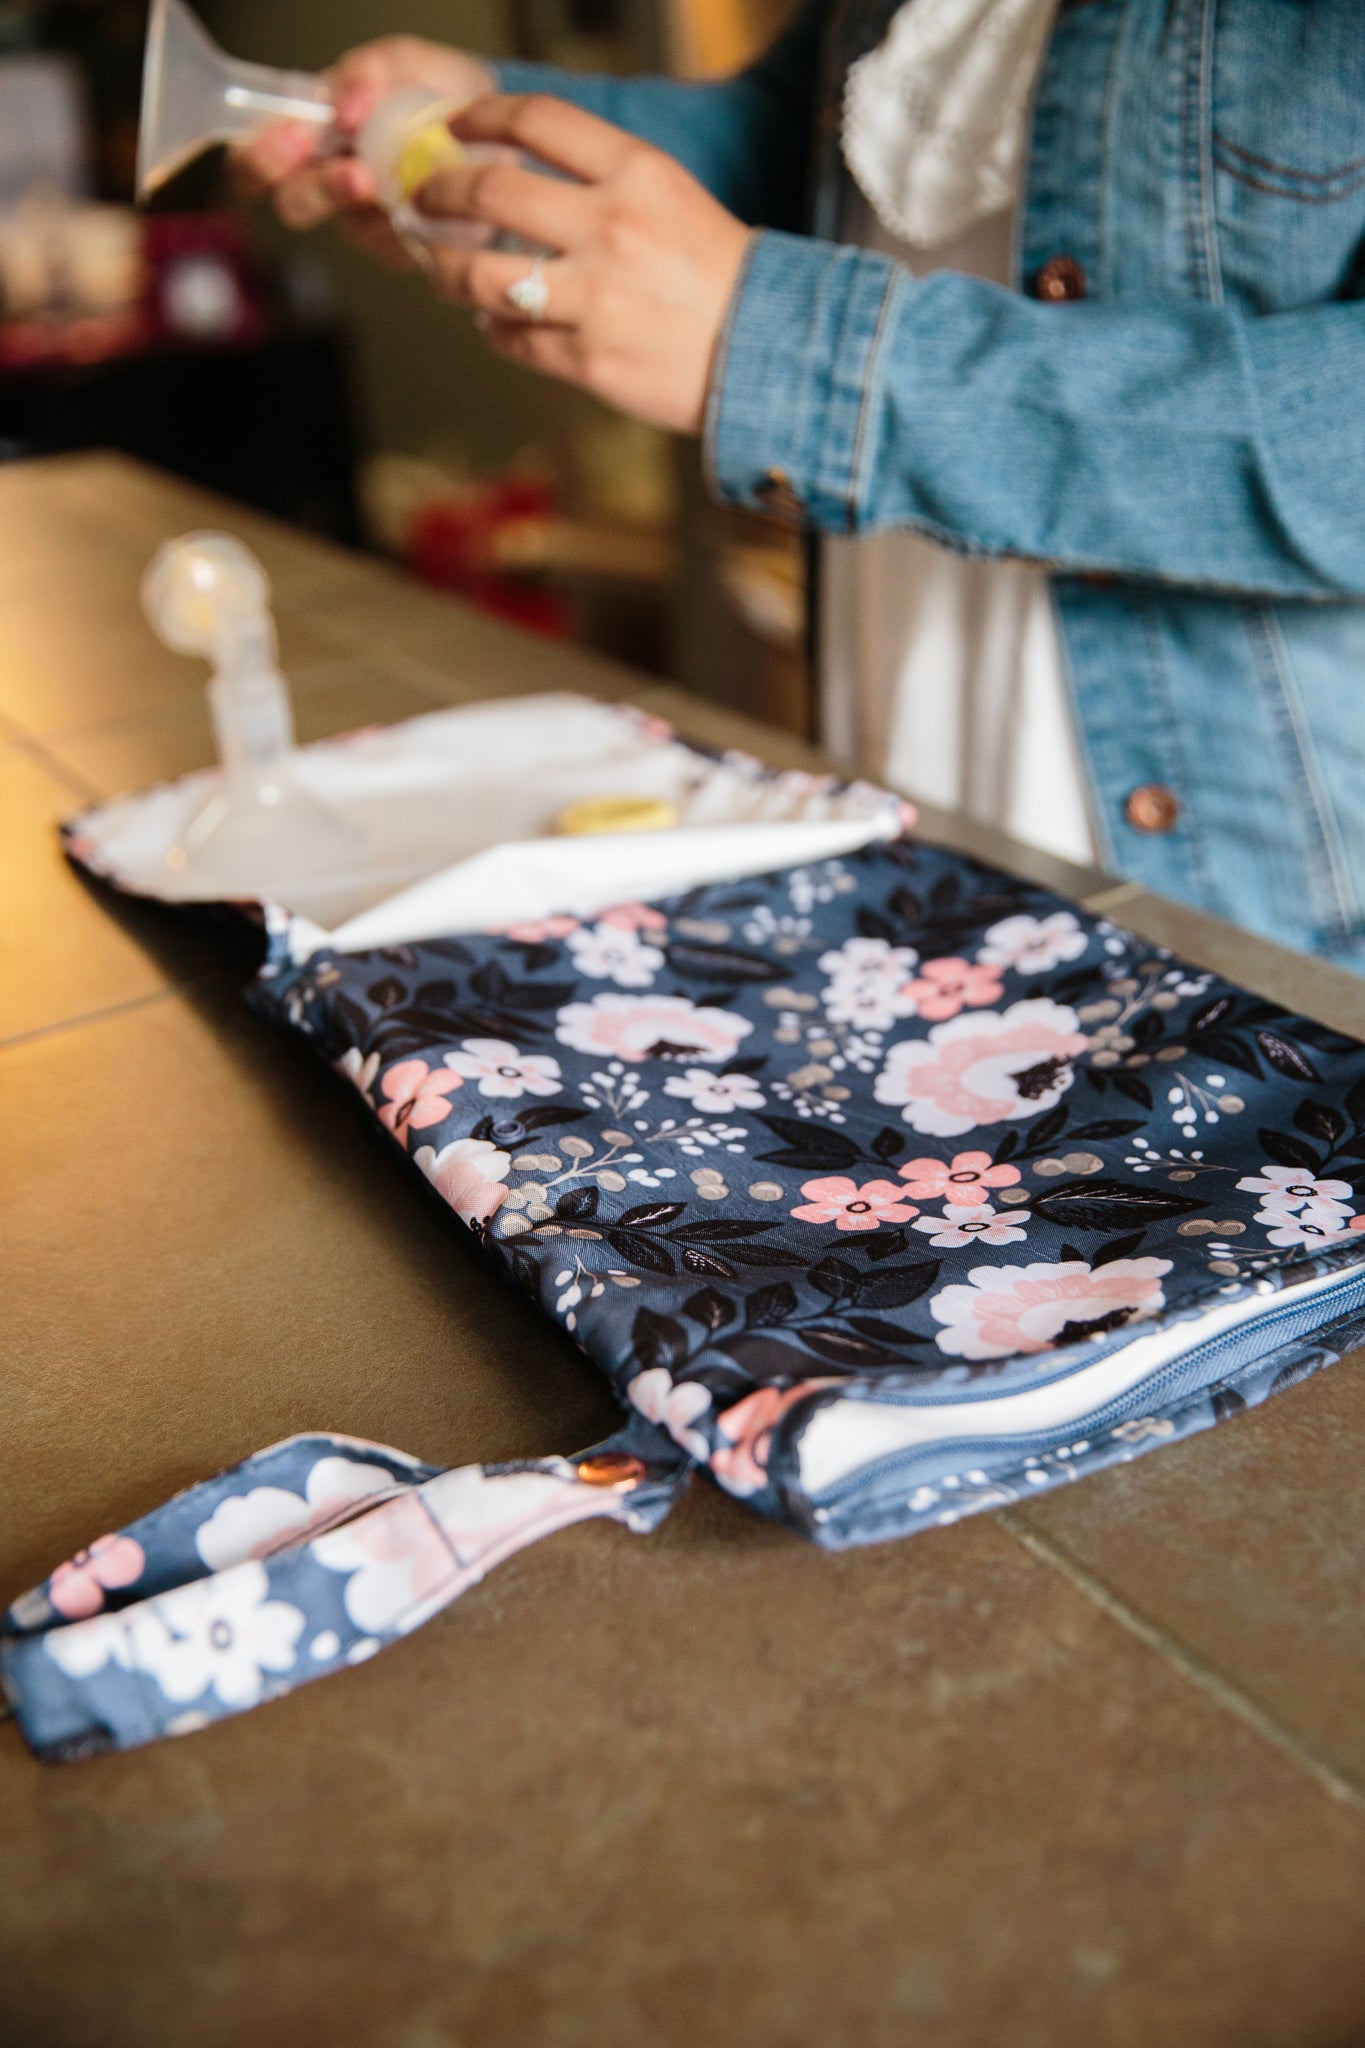 Pumparoo (Le Floral) / Breast Pump Bags & Accessories from Sarah Wells